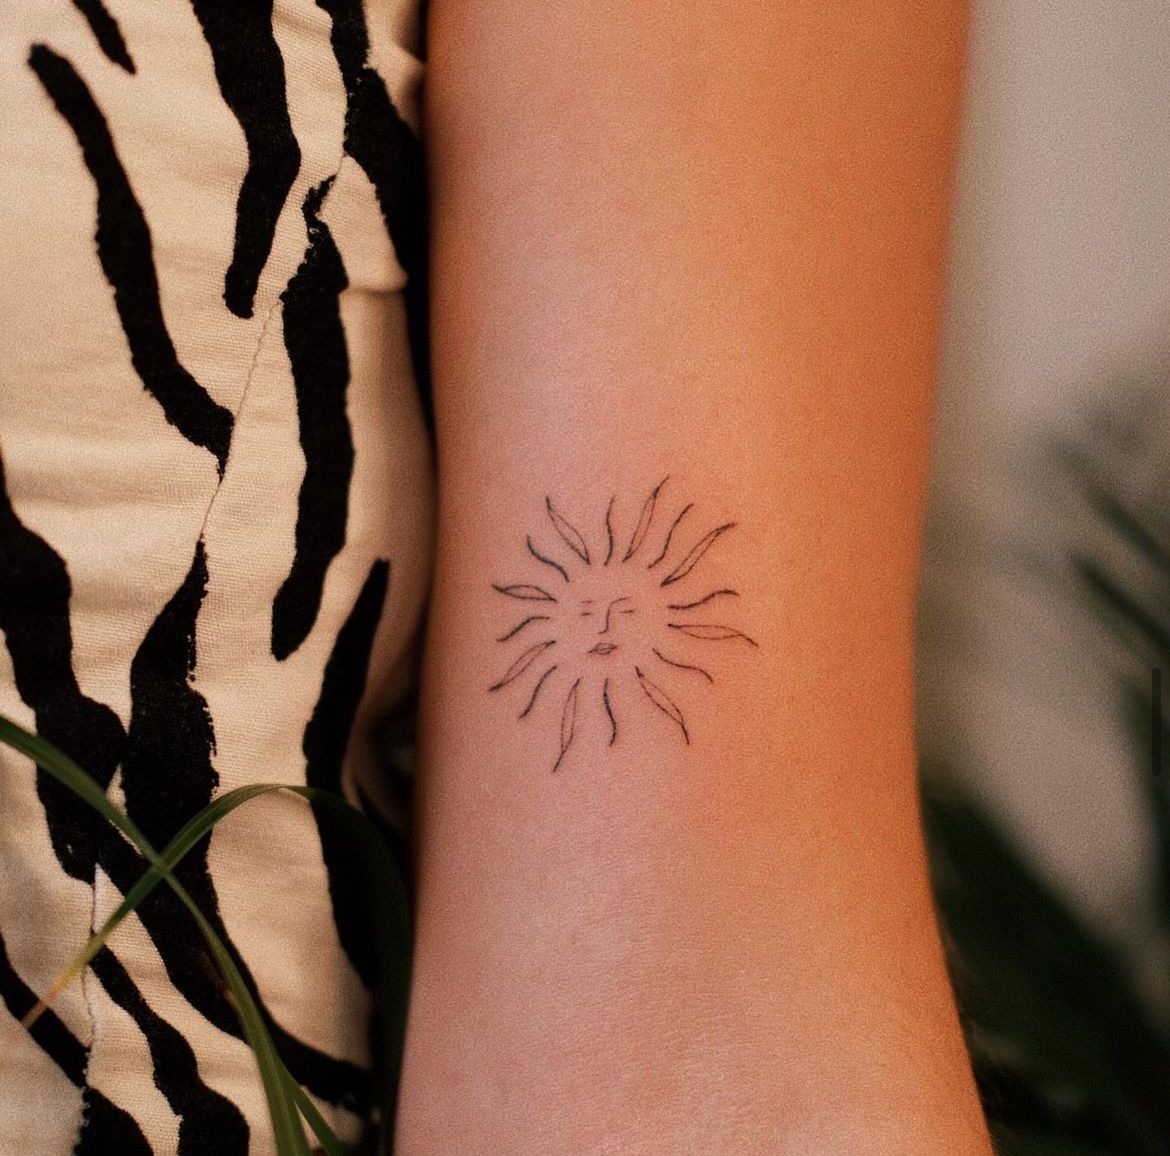 File:Sunshine tattoo.jpg - Wikimedia Commons